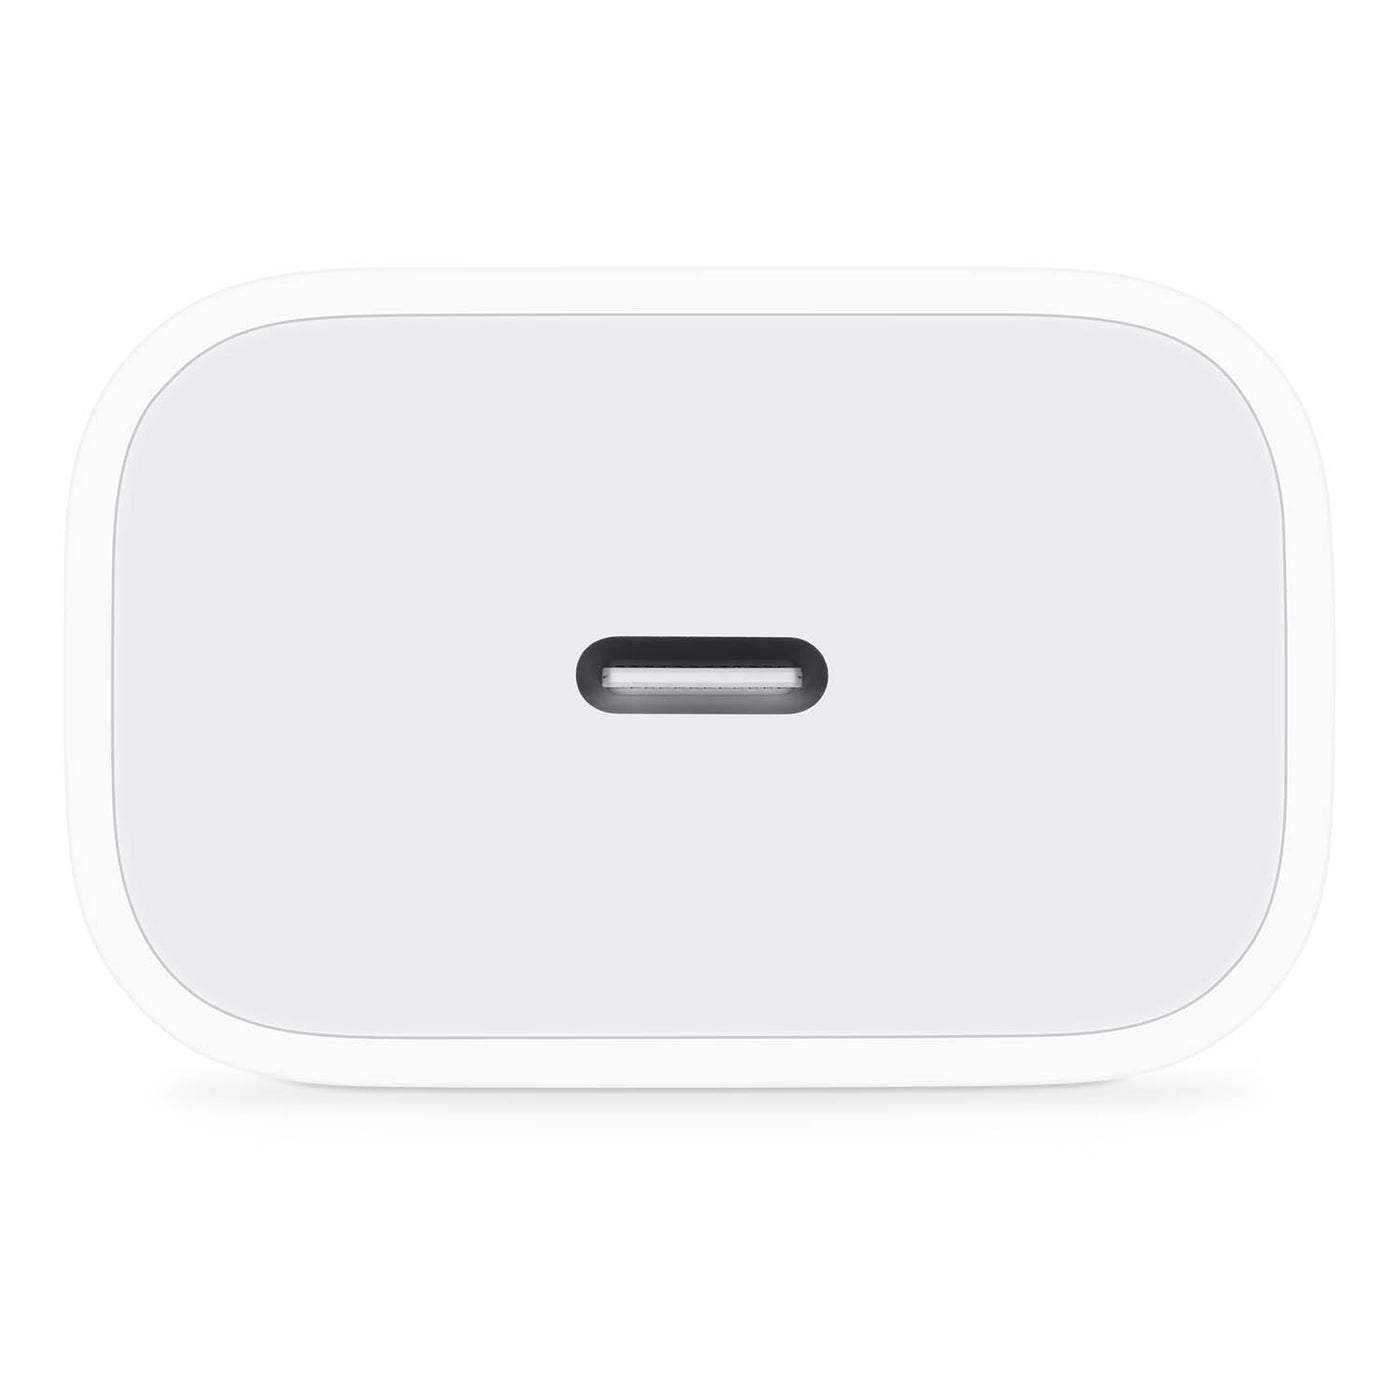 Apple 20W USB-C Power Adapter – The Bowdoin Store